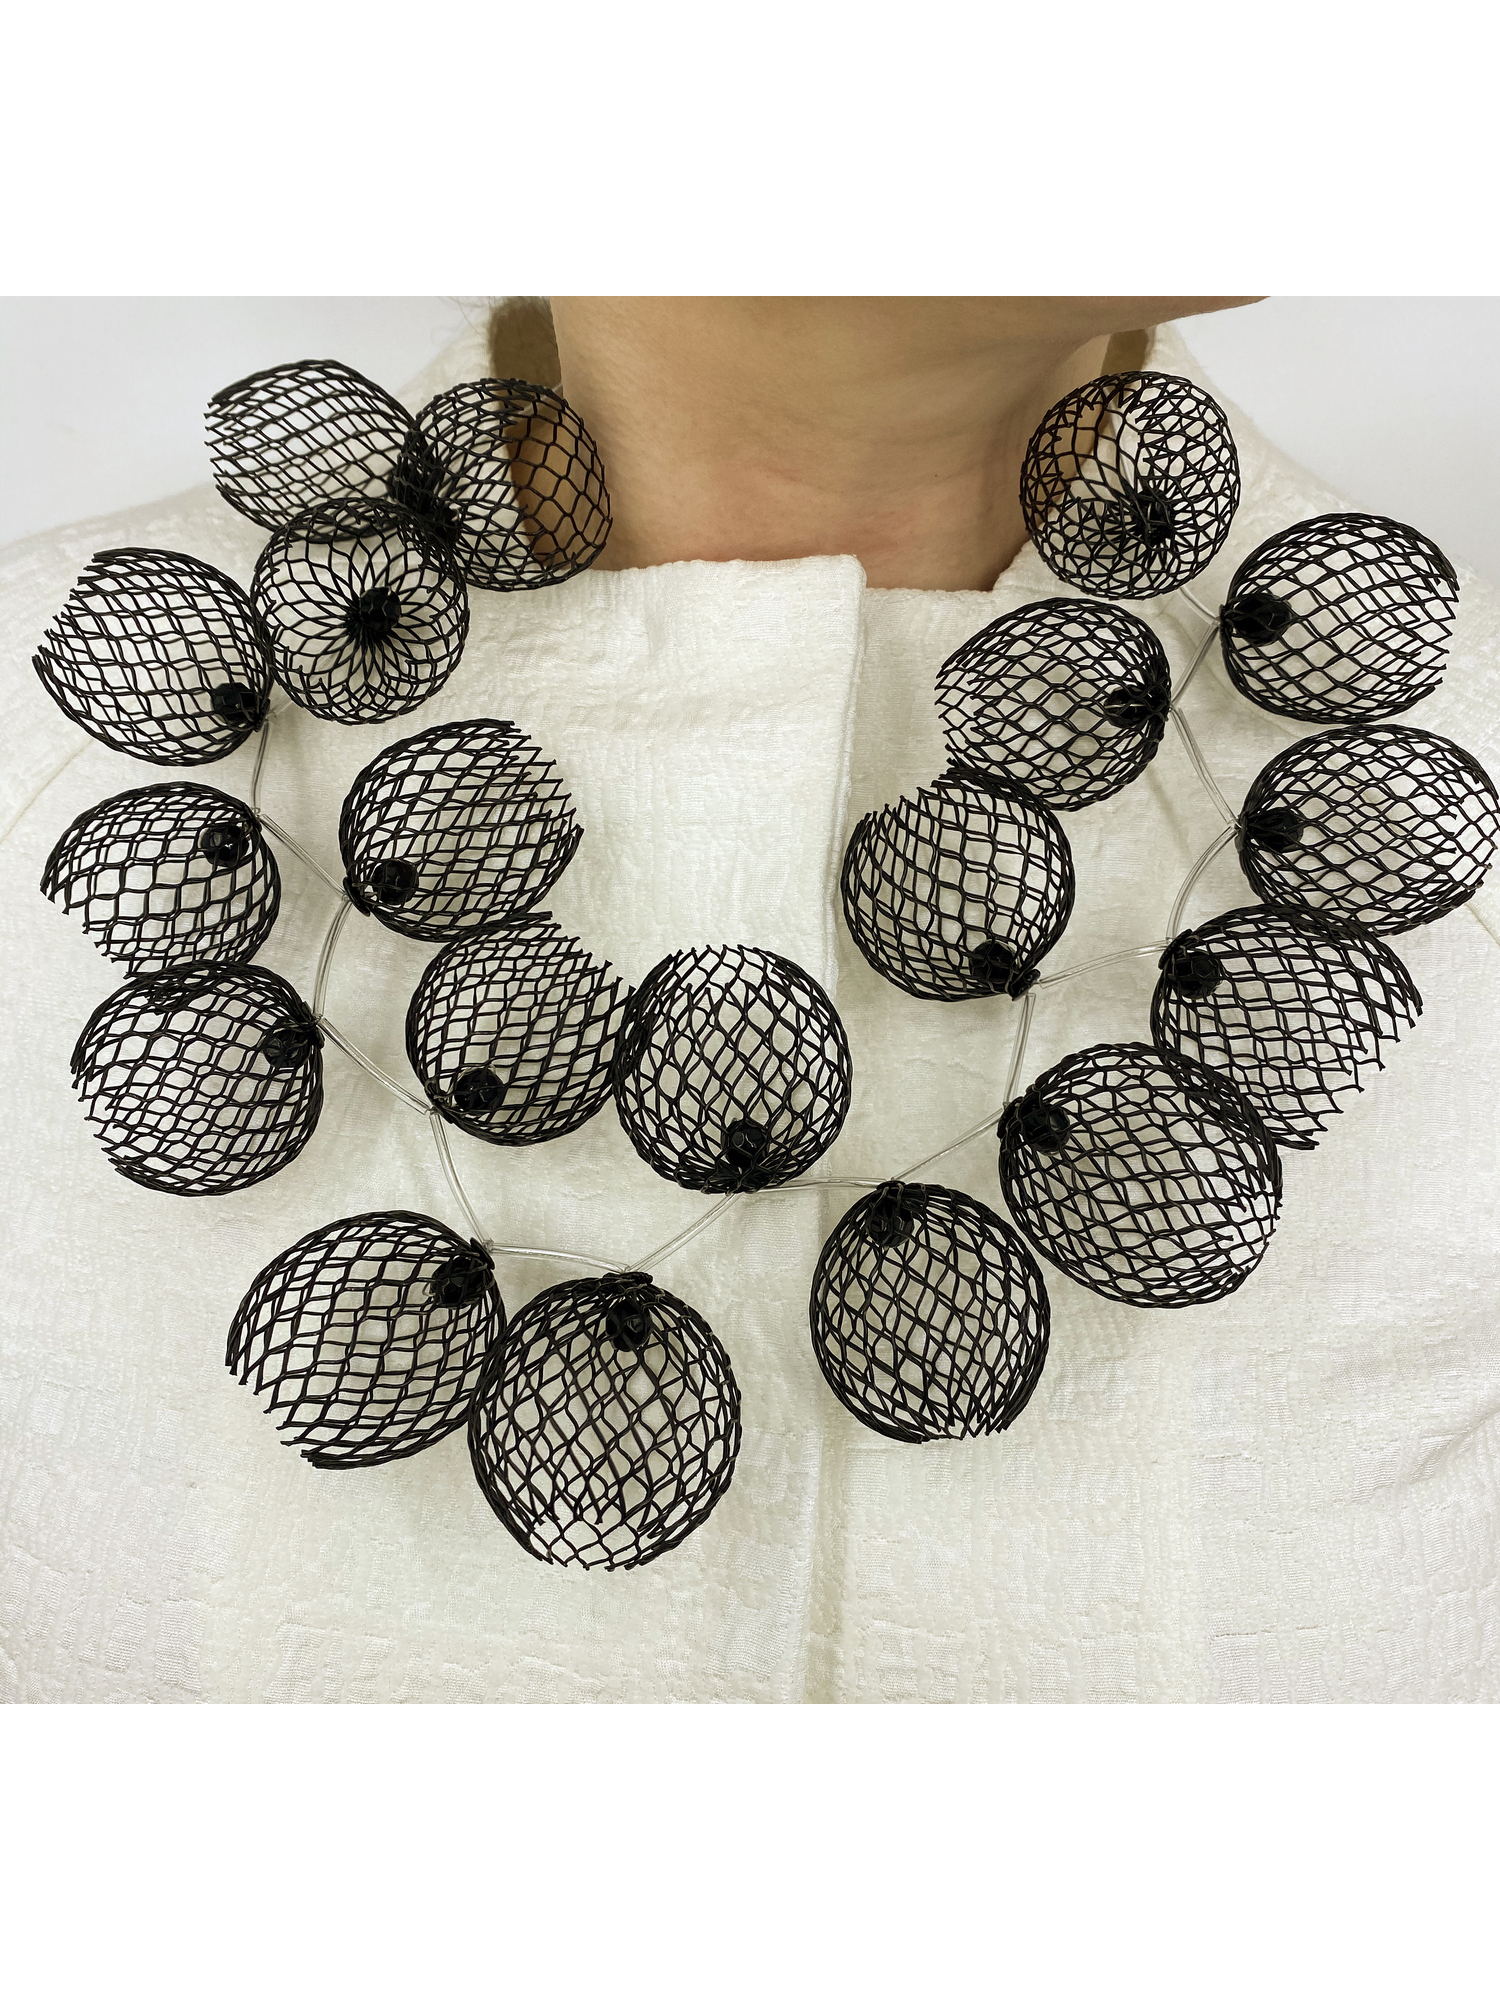 Buy Black unique designer mesh beads Czech glass handmade statement necklace